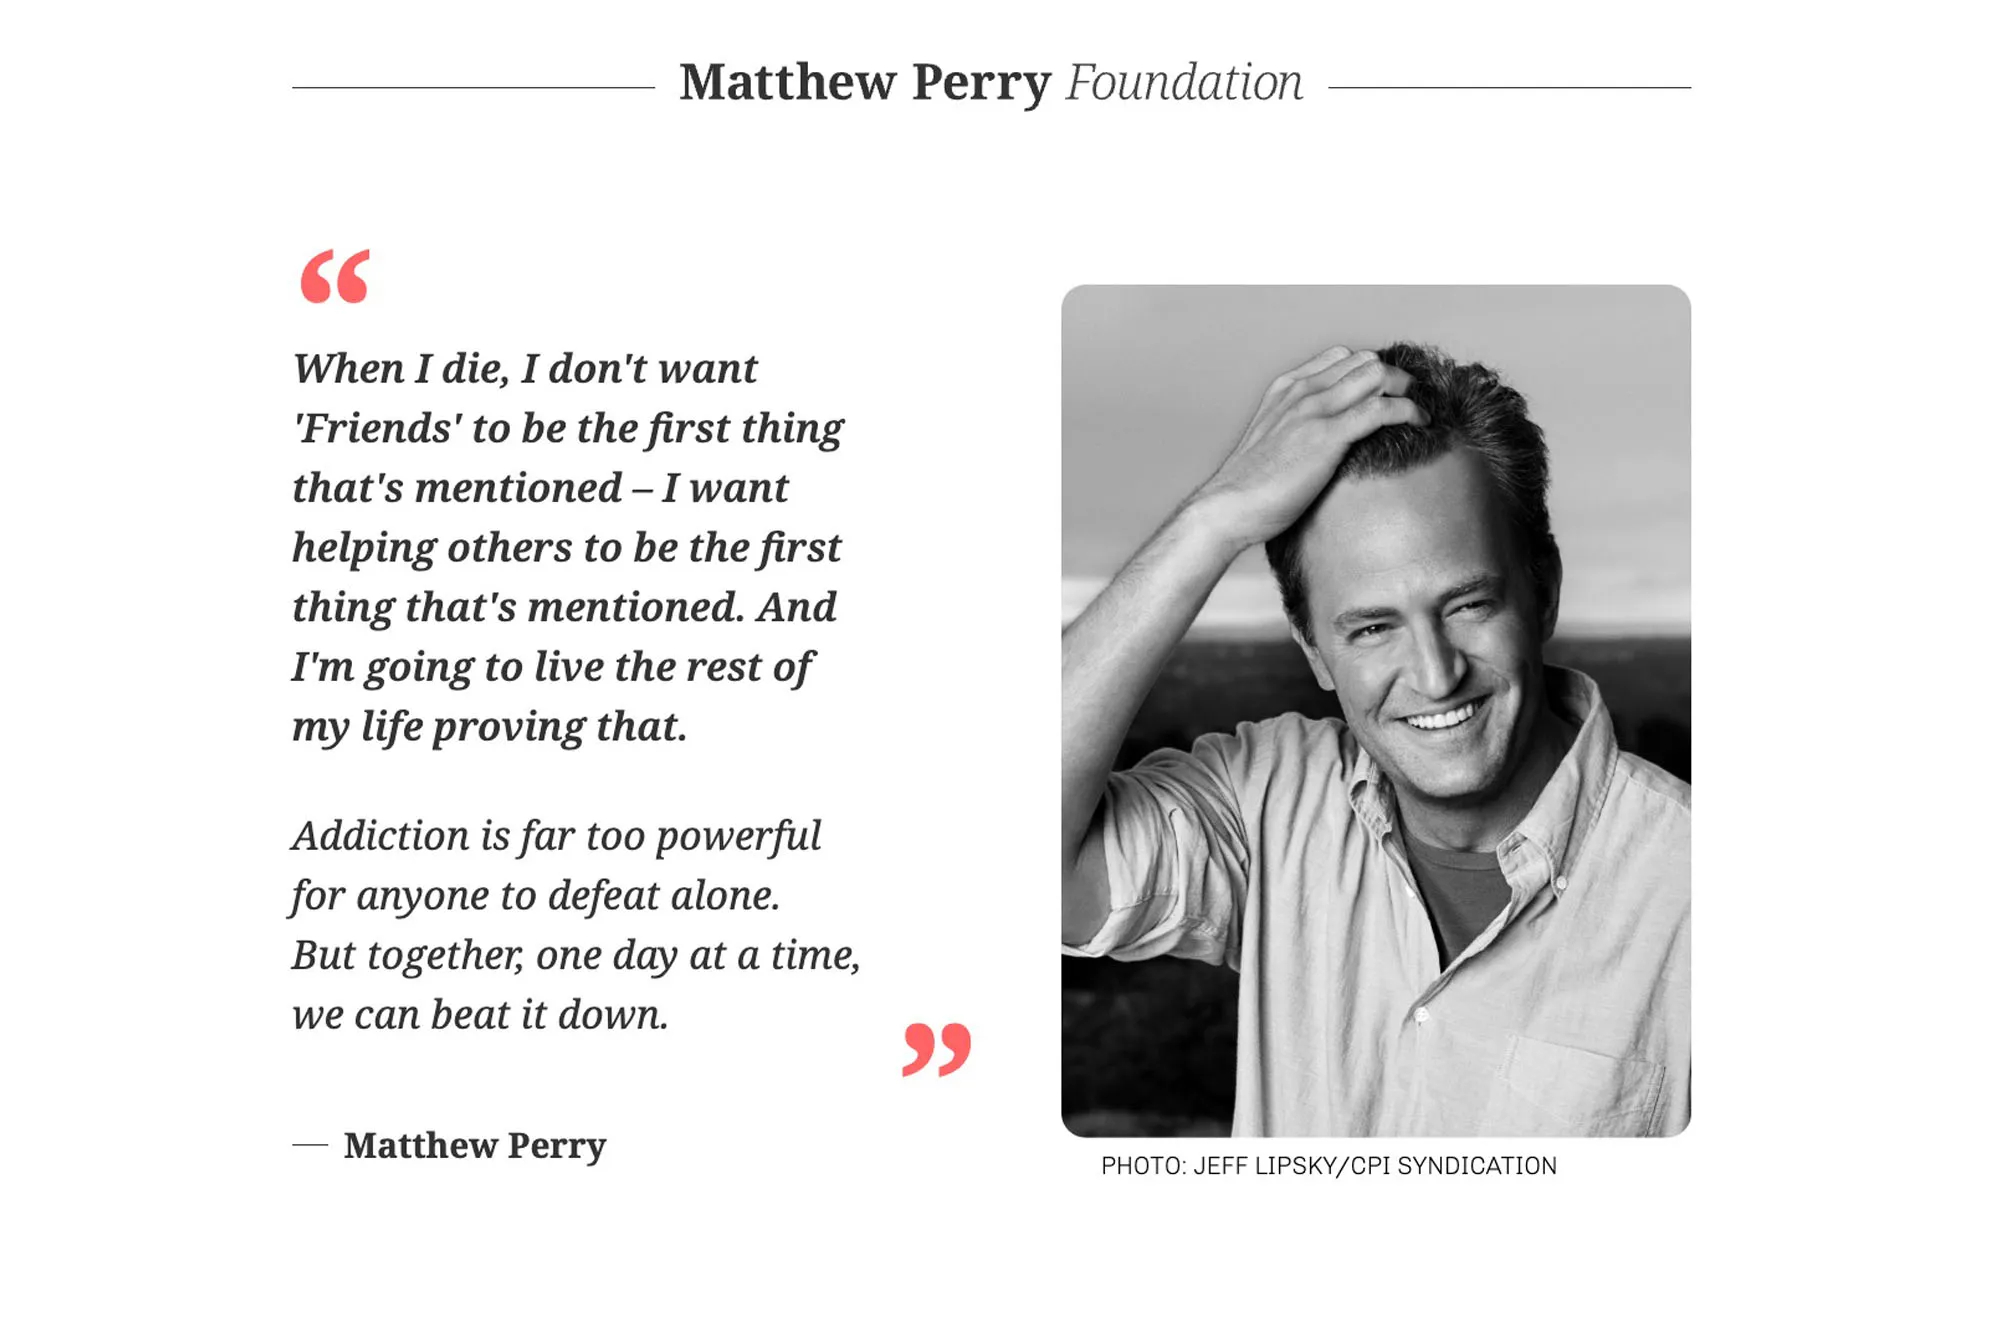 Crearon "The Matthew Perry Foundation